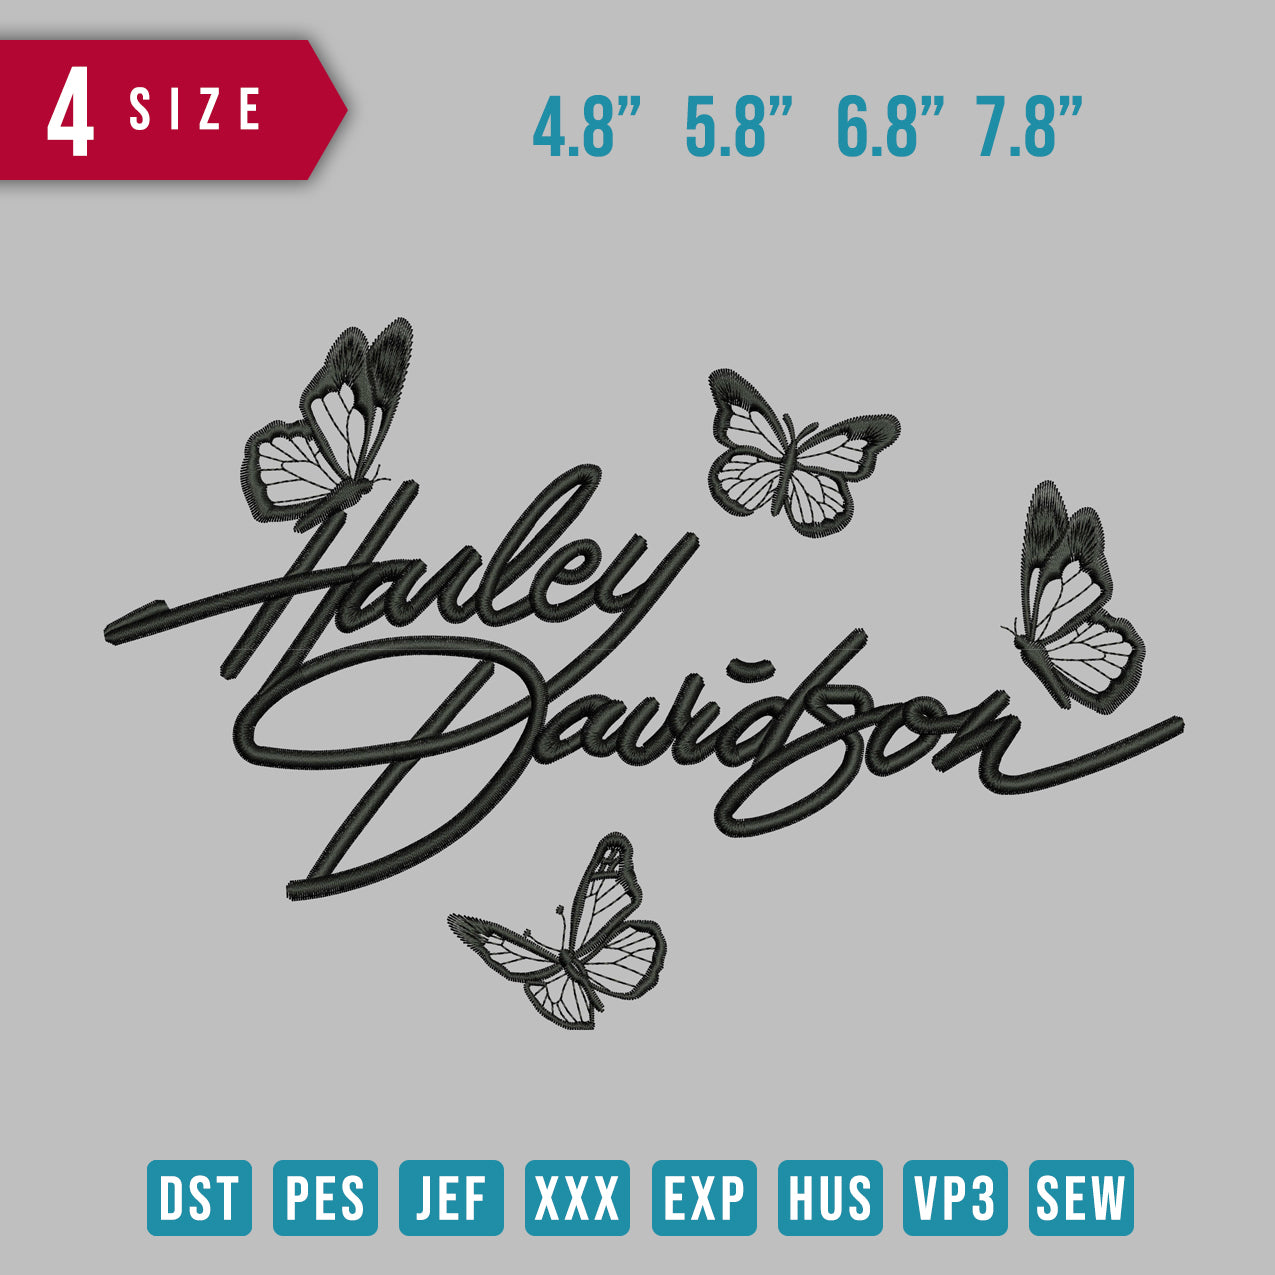 Harley Davidson Butterfly